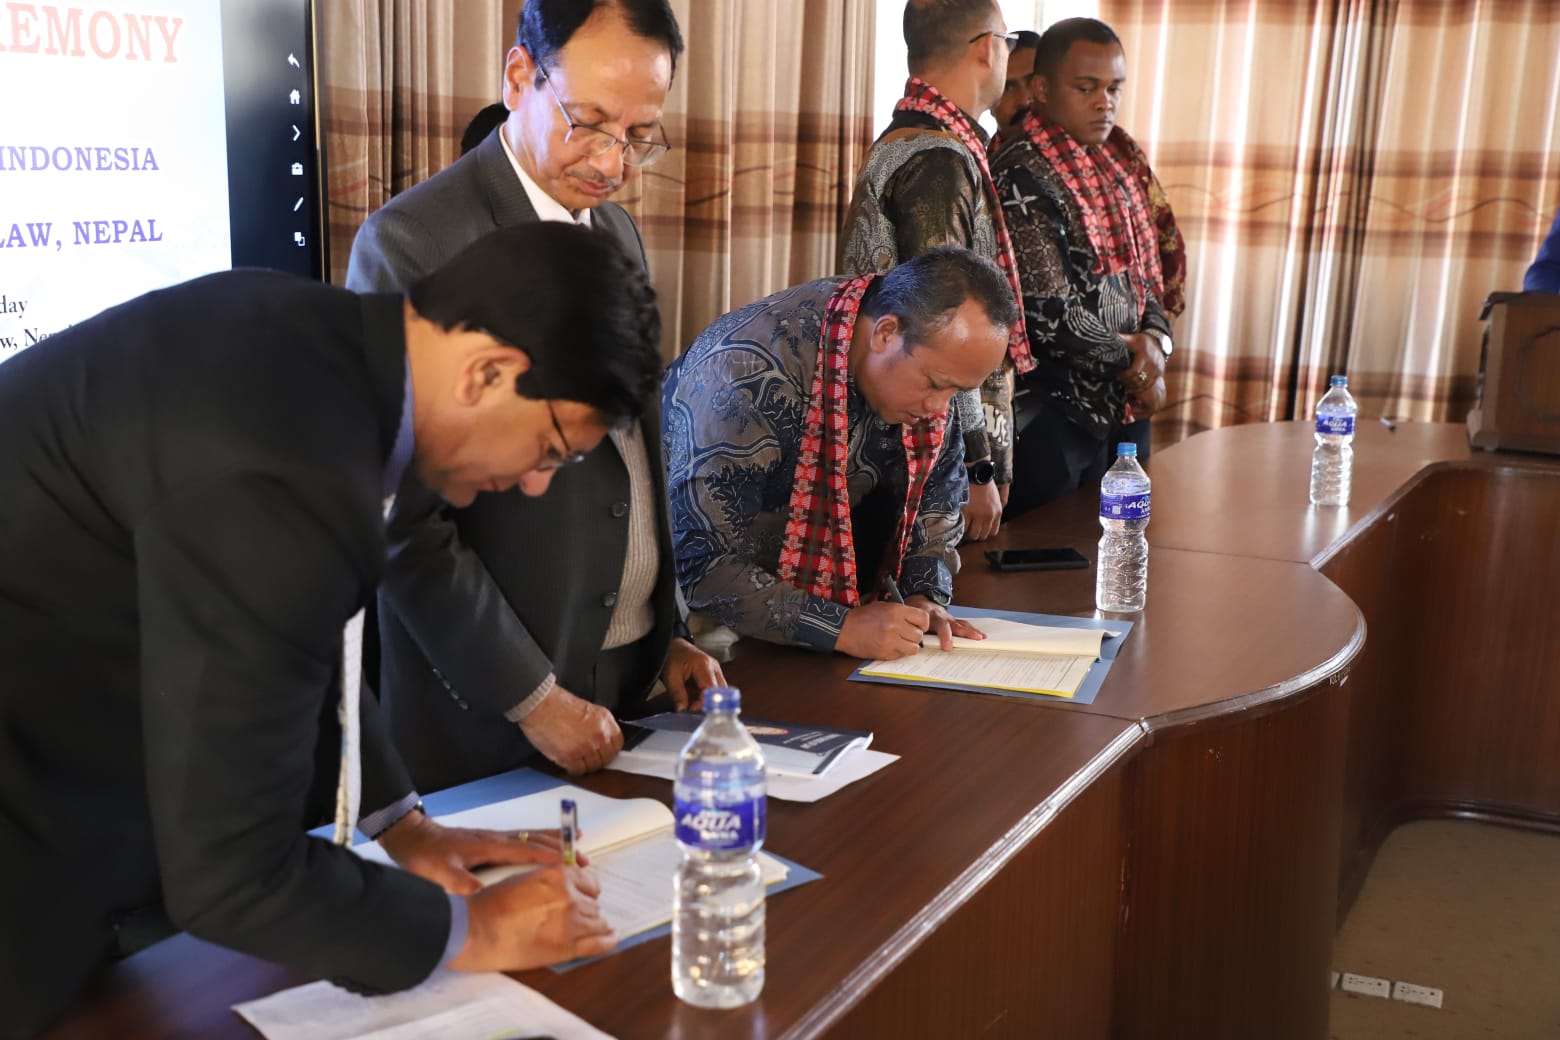 Jalin Kerjasama dengan Kathmandu Law School Nepal, Nusa Putra Perkuat Jaringan Hukum Internasional